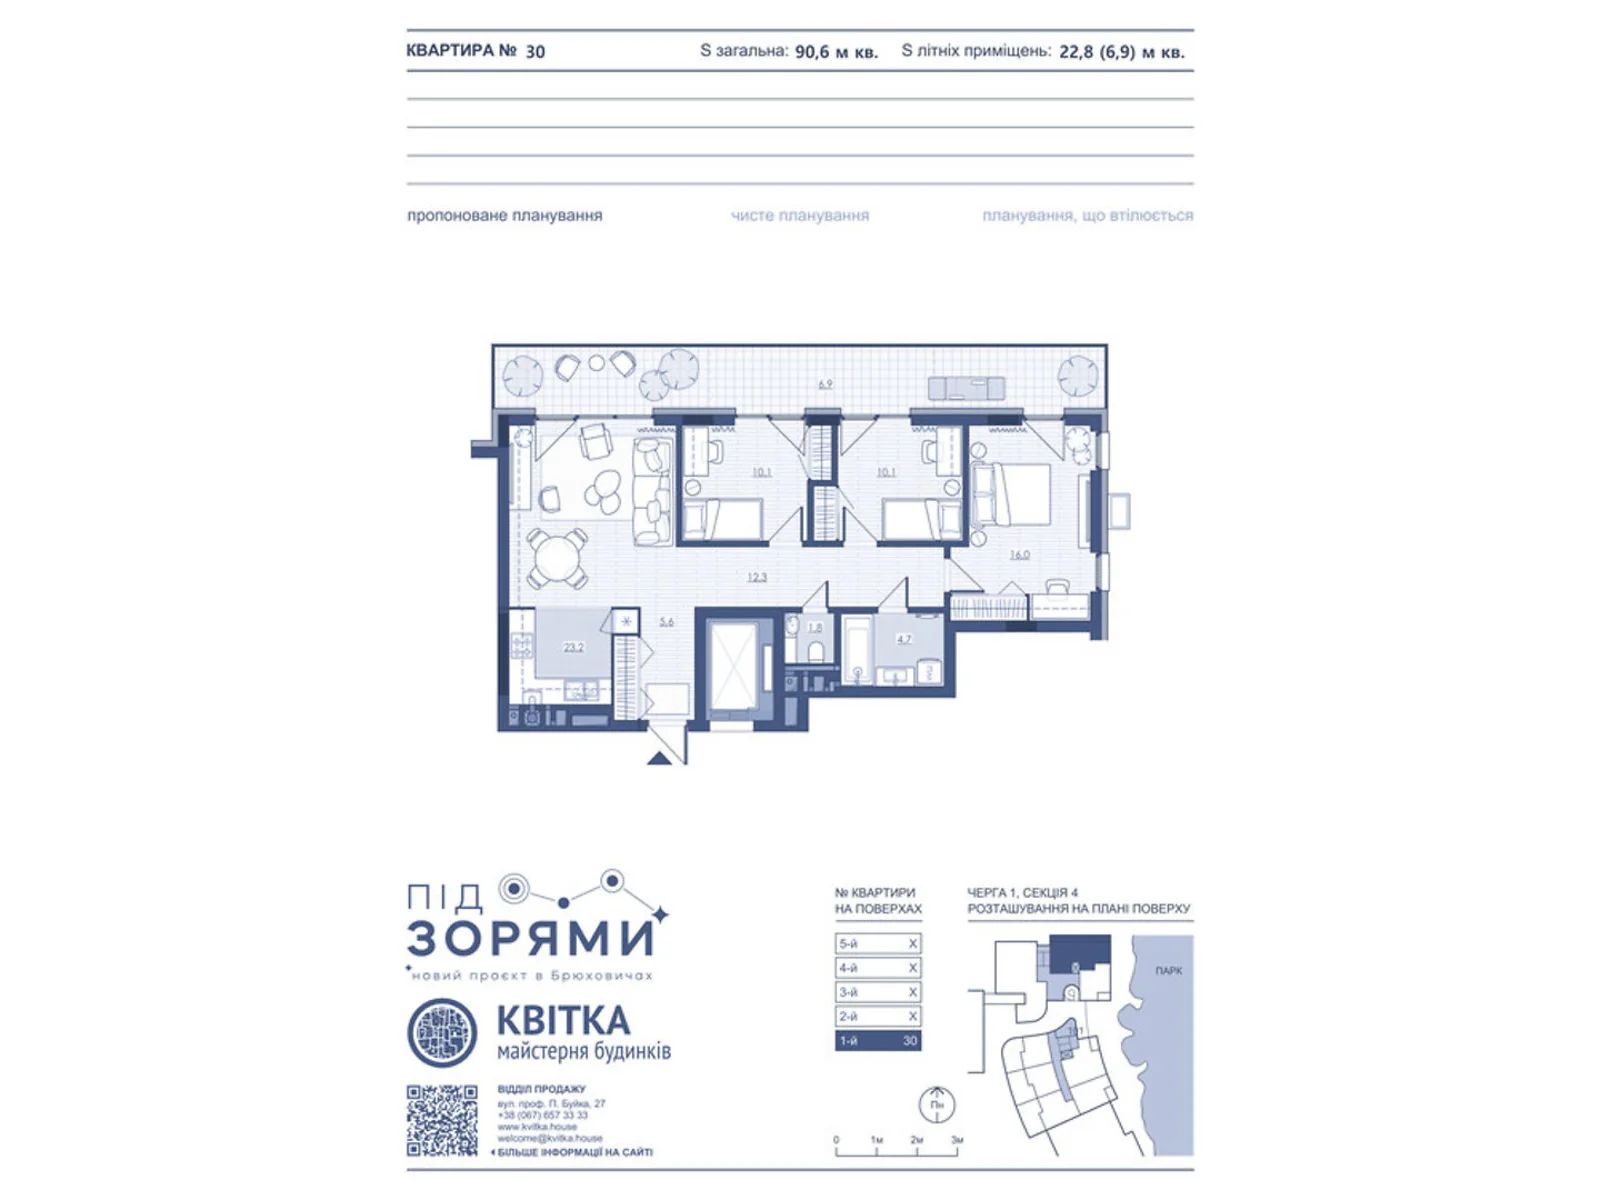 Продается 3-комнатная квартира 86.8 кв. м в Брюховичах, цена: 82026 $ - фото 1